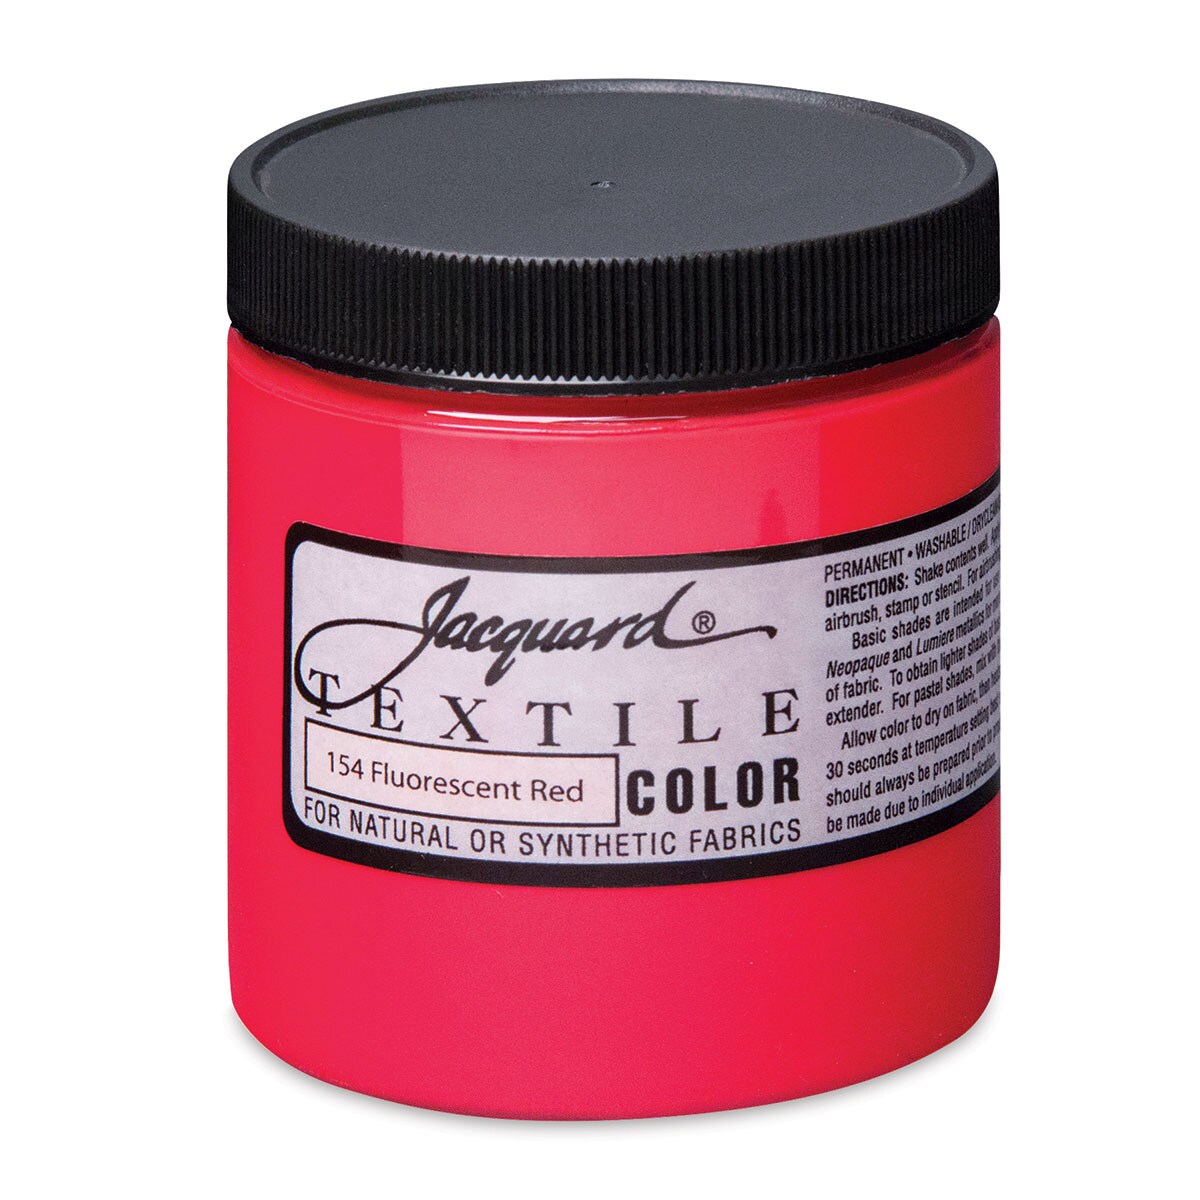 Jacquard Textile Color - True Red, 8 oz jar